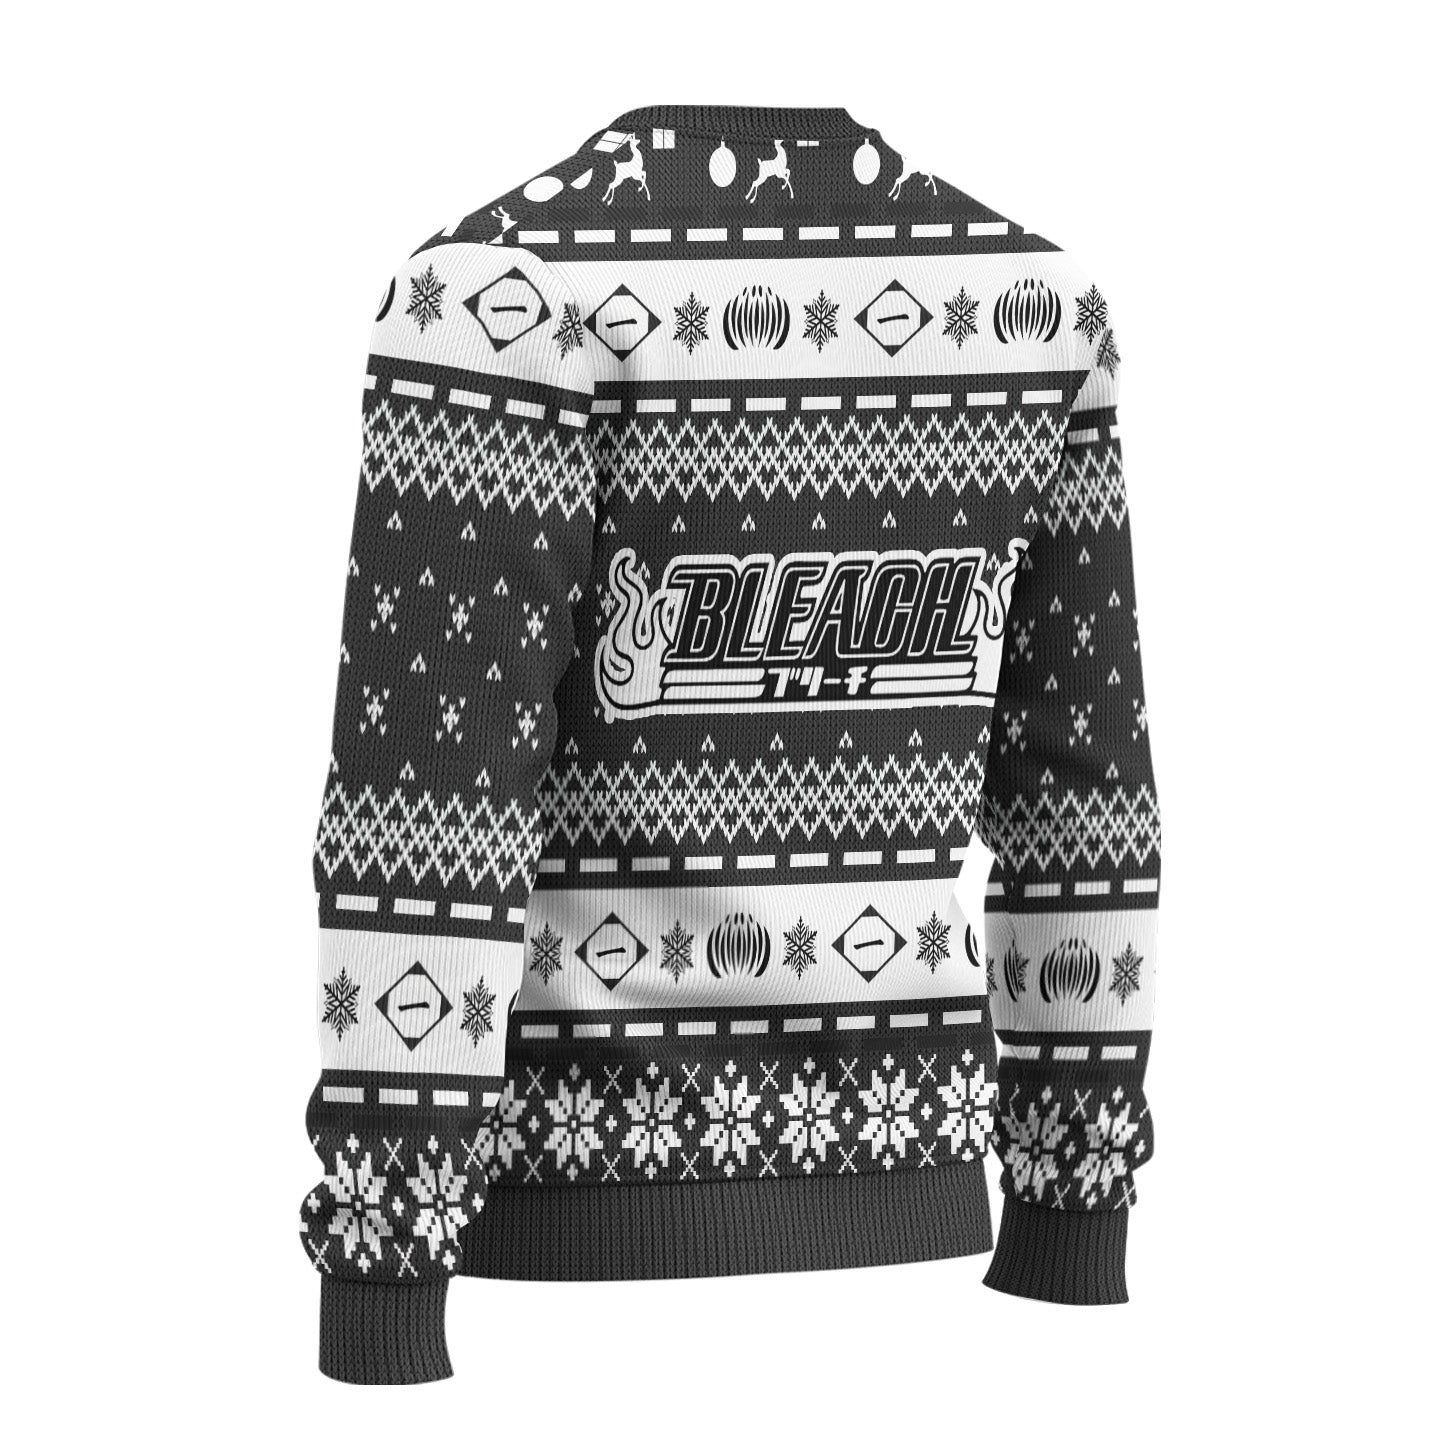 Shunsui Kyoraku Ugly Christmas Sweater Custom Bleach Anime New Design